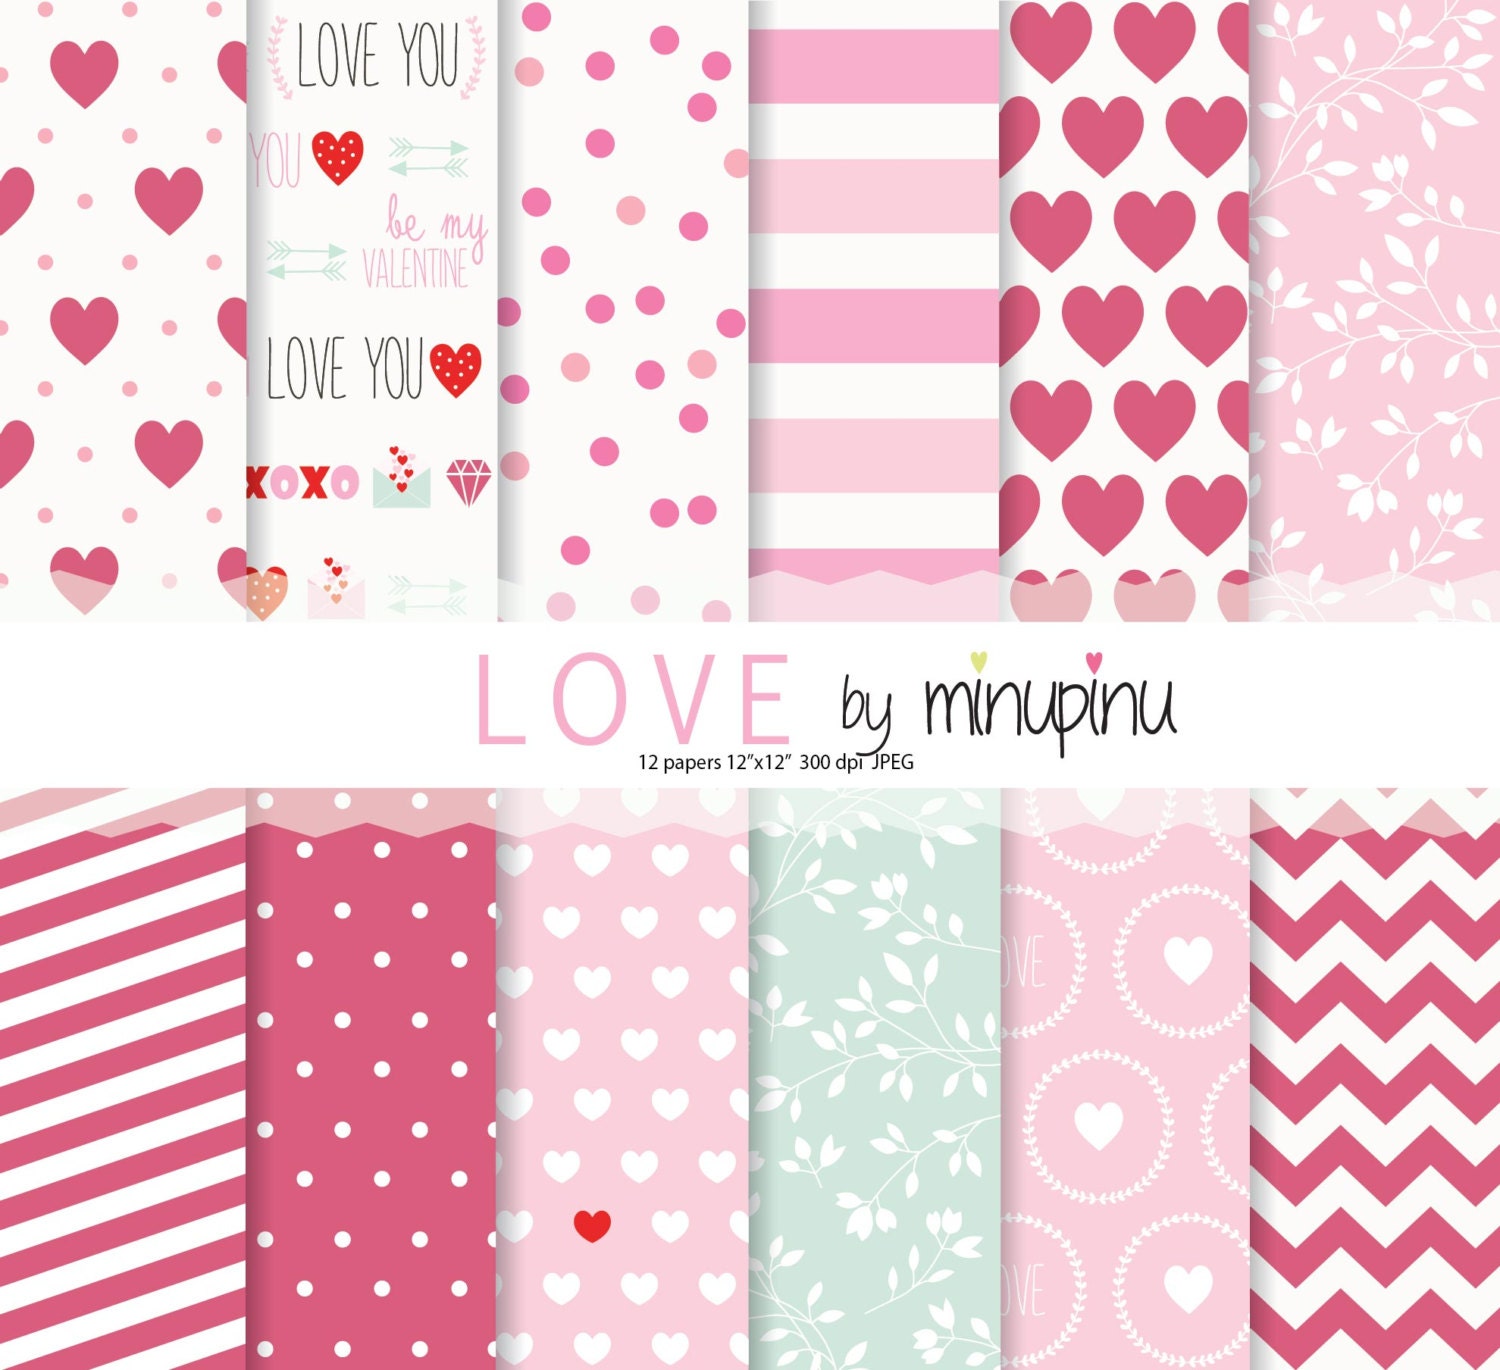 Love you digital paper pack, valentine scrapbook pages